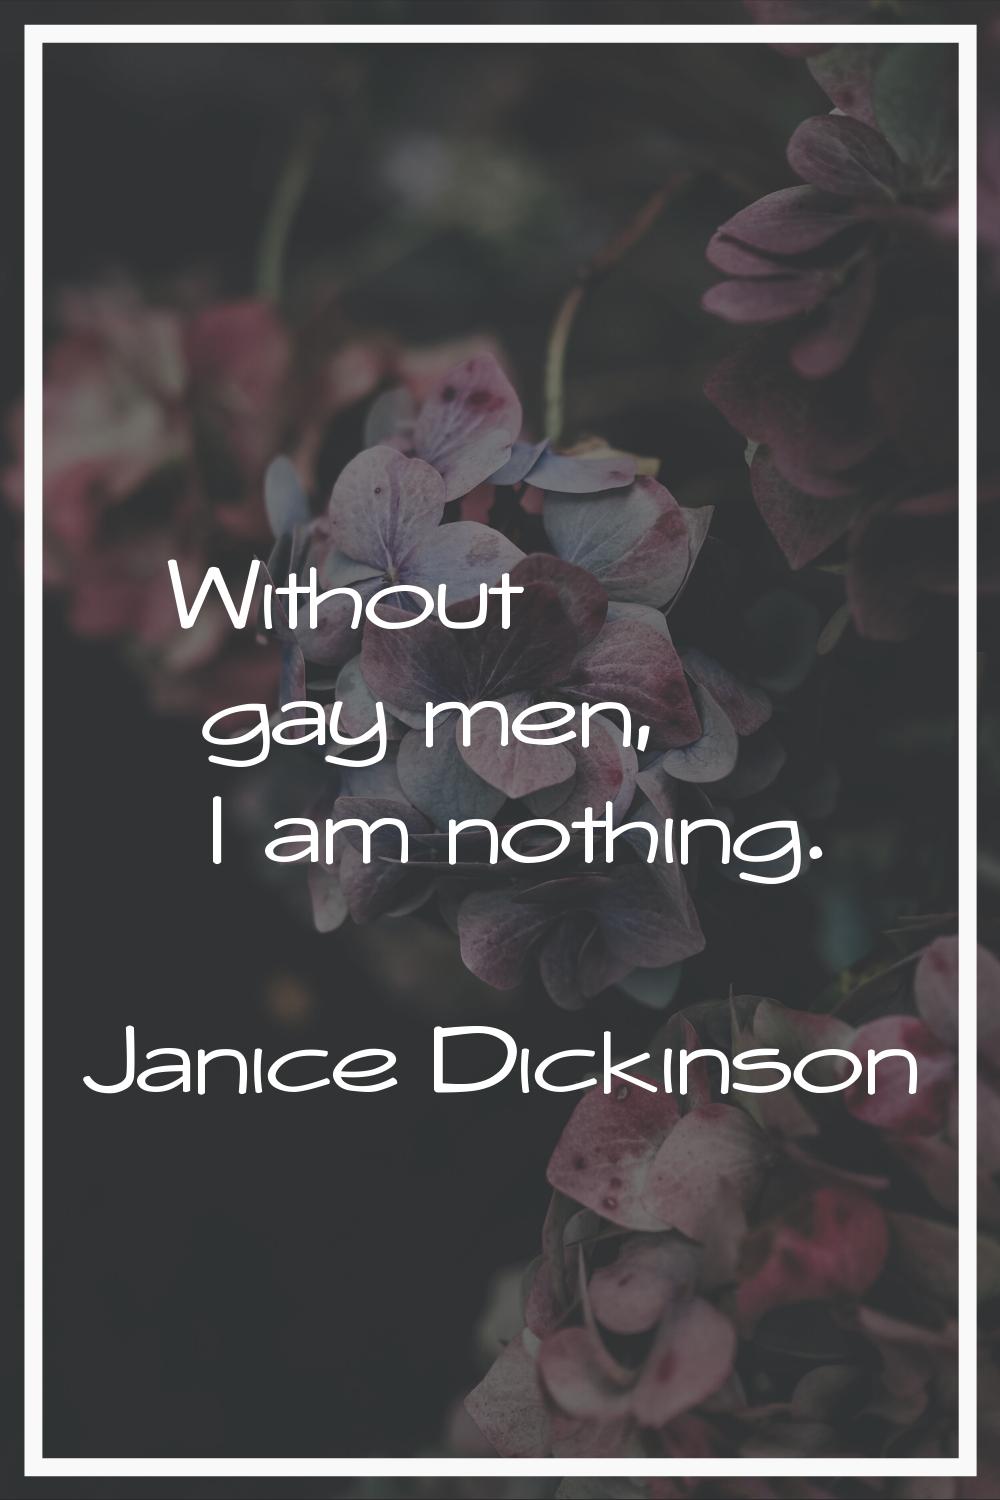 Without gay men, I am nothing.